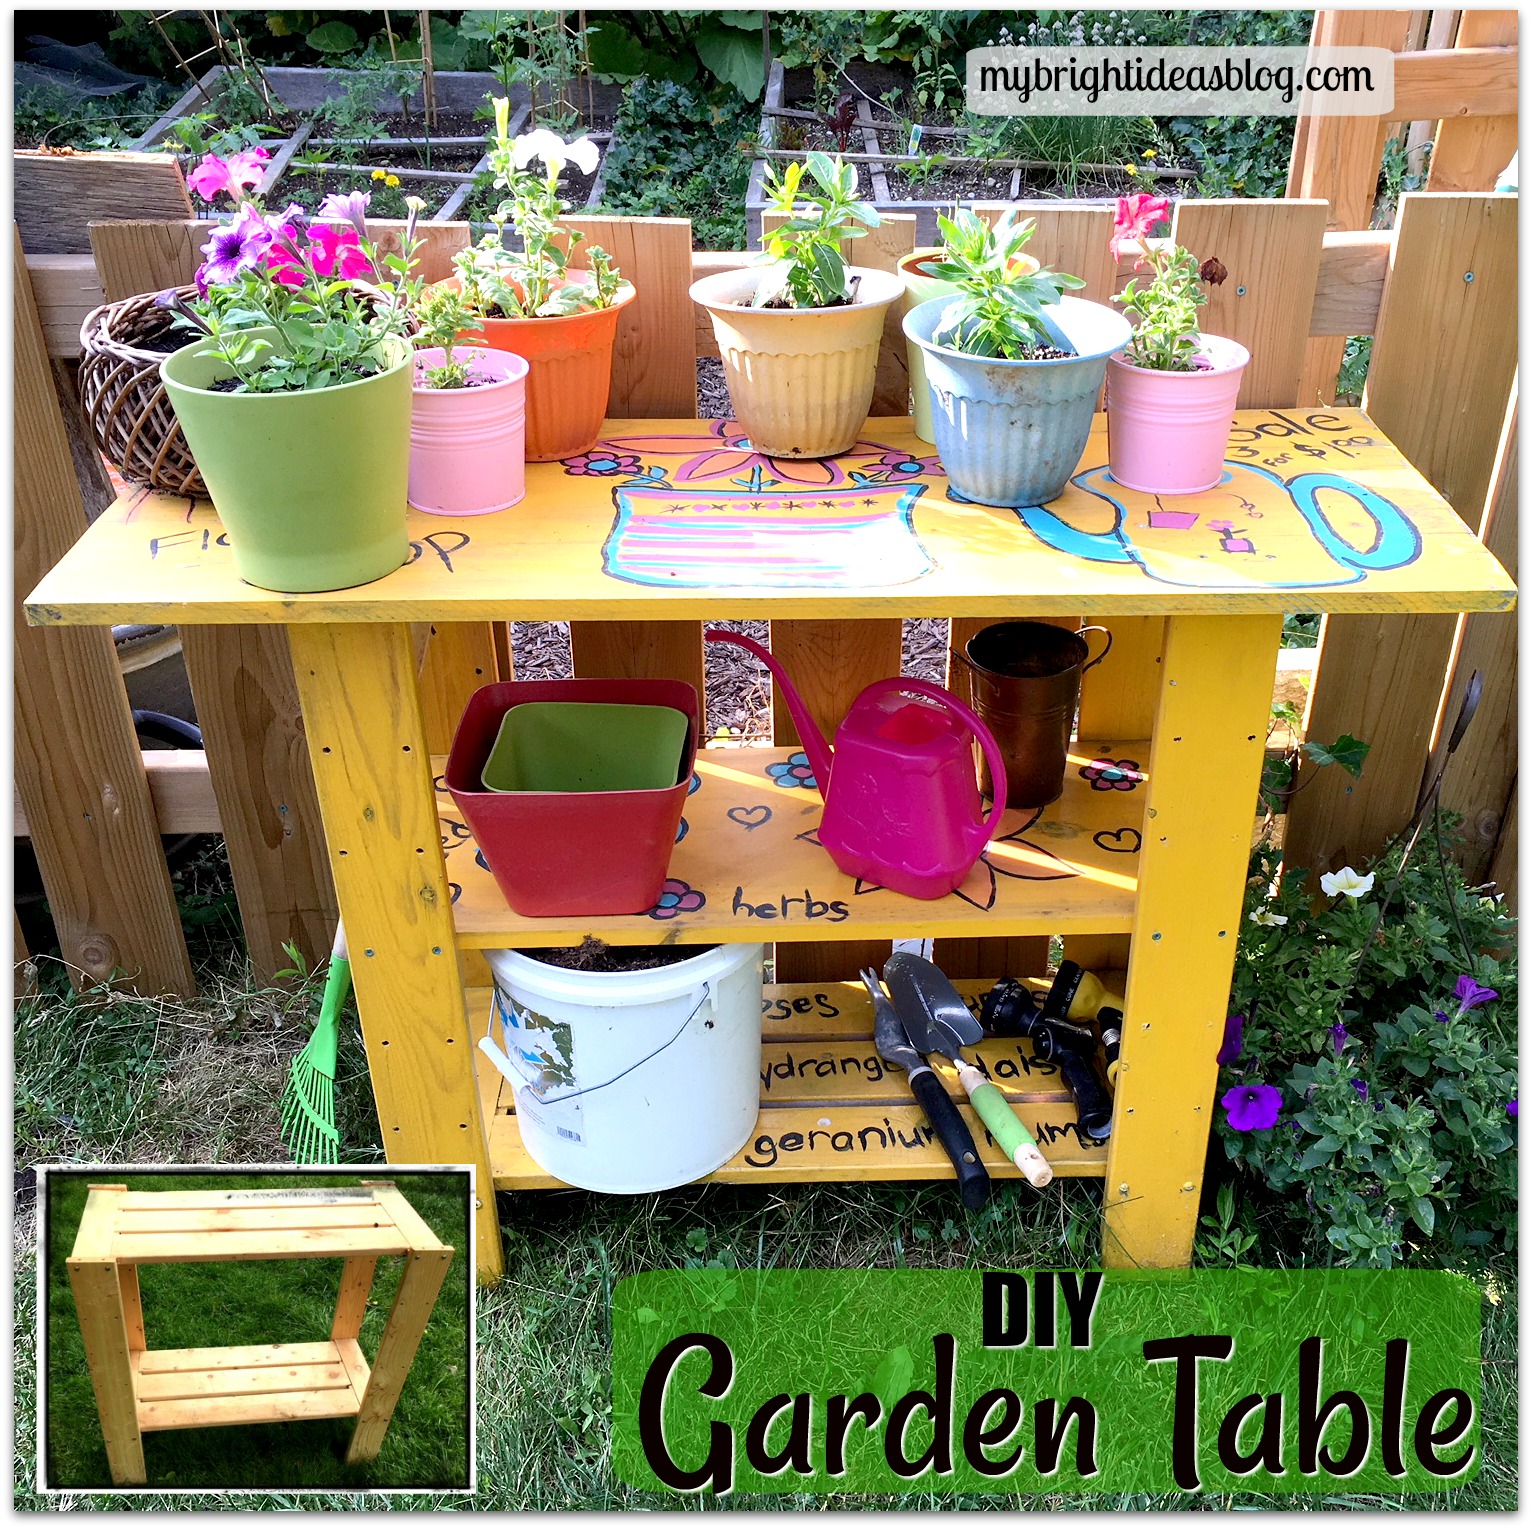 Easy Garden Table Diy. Take a shelf and turn it into a potting work bench. Mybrightideasblog.com